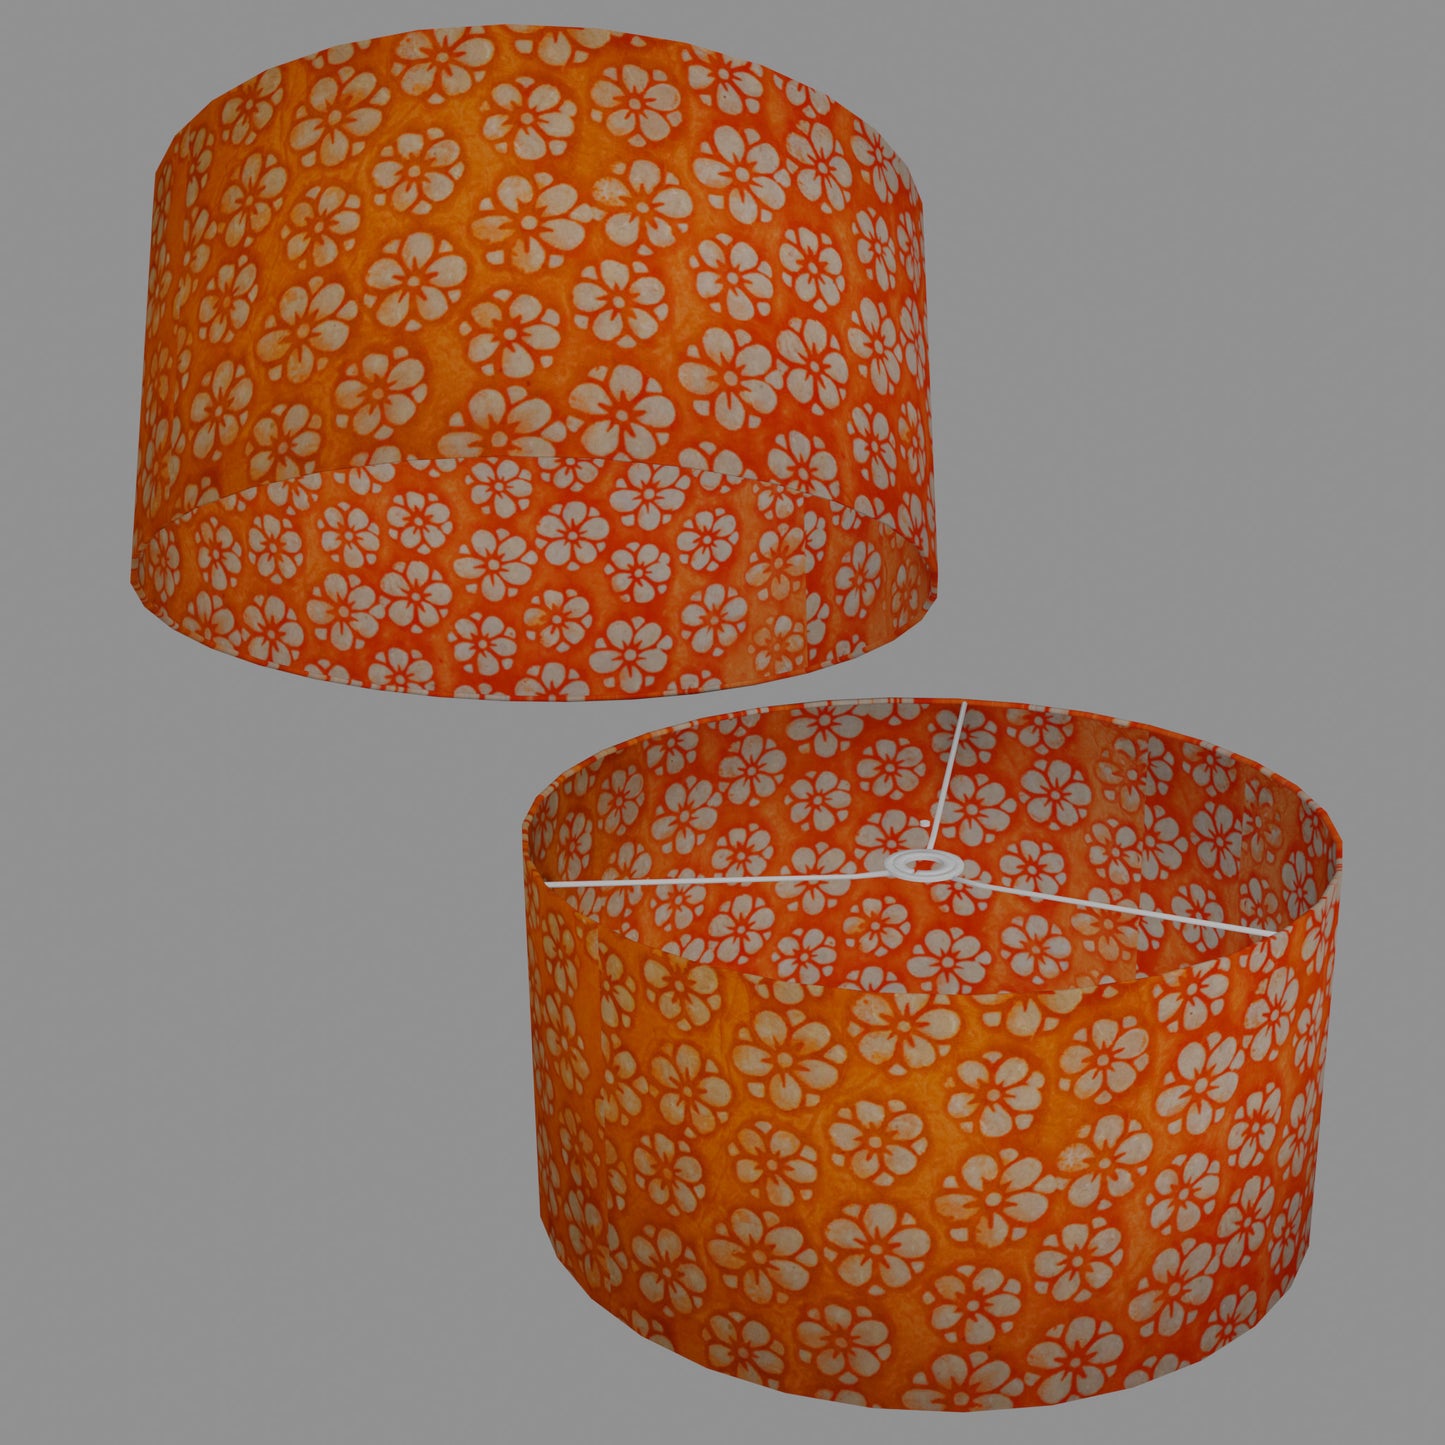 Drum Lamp Shade - P94 - Batik Star Flower on Orange, 50cm(d) x 25cm(h)